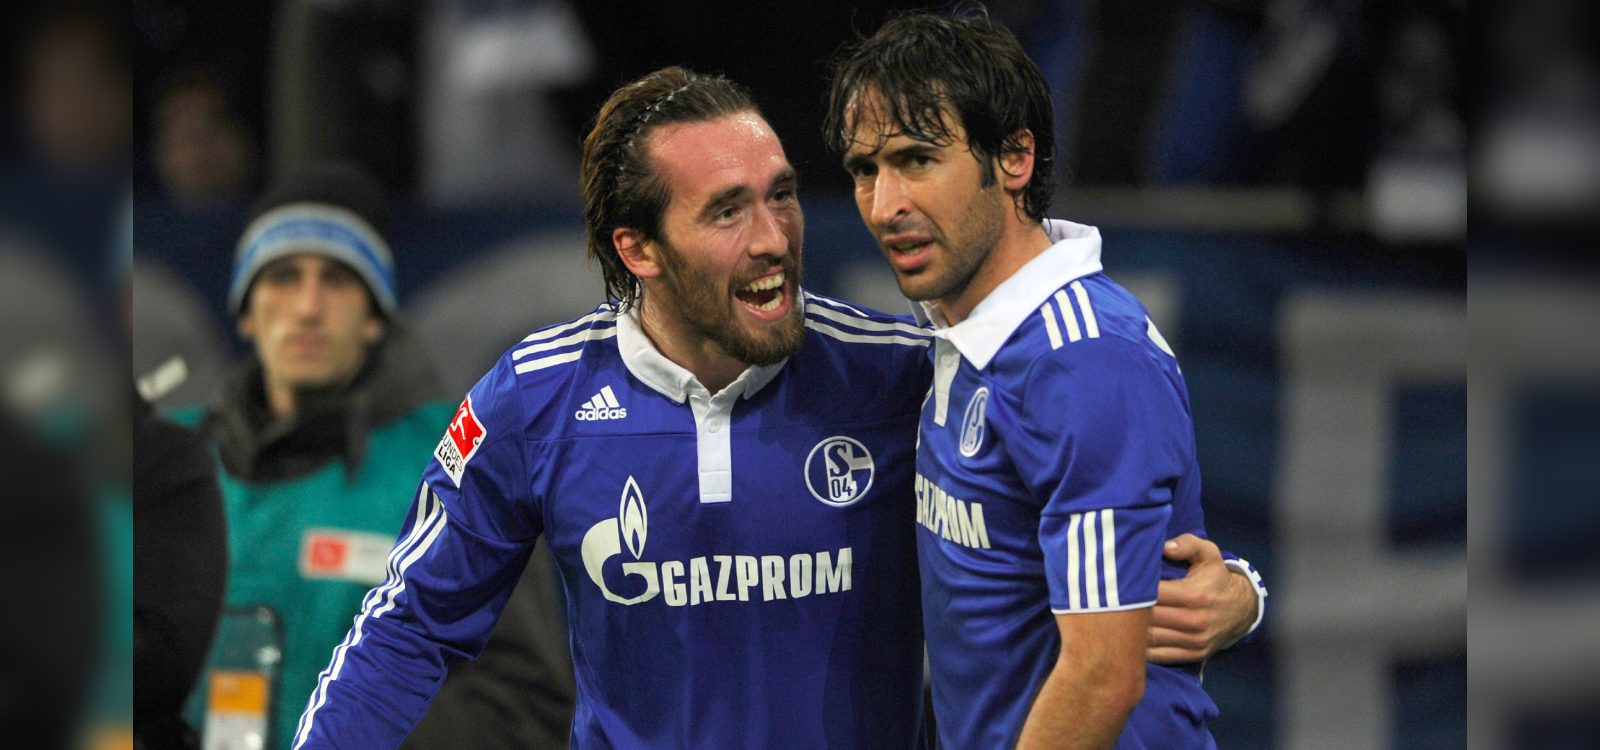 Schalke Asks for Advice from Raul Gonzalez